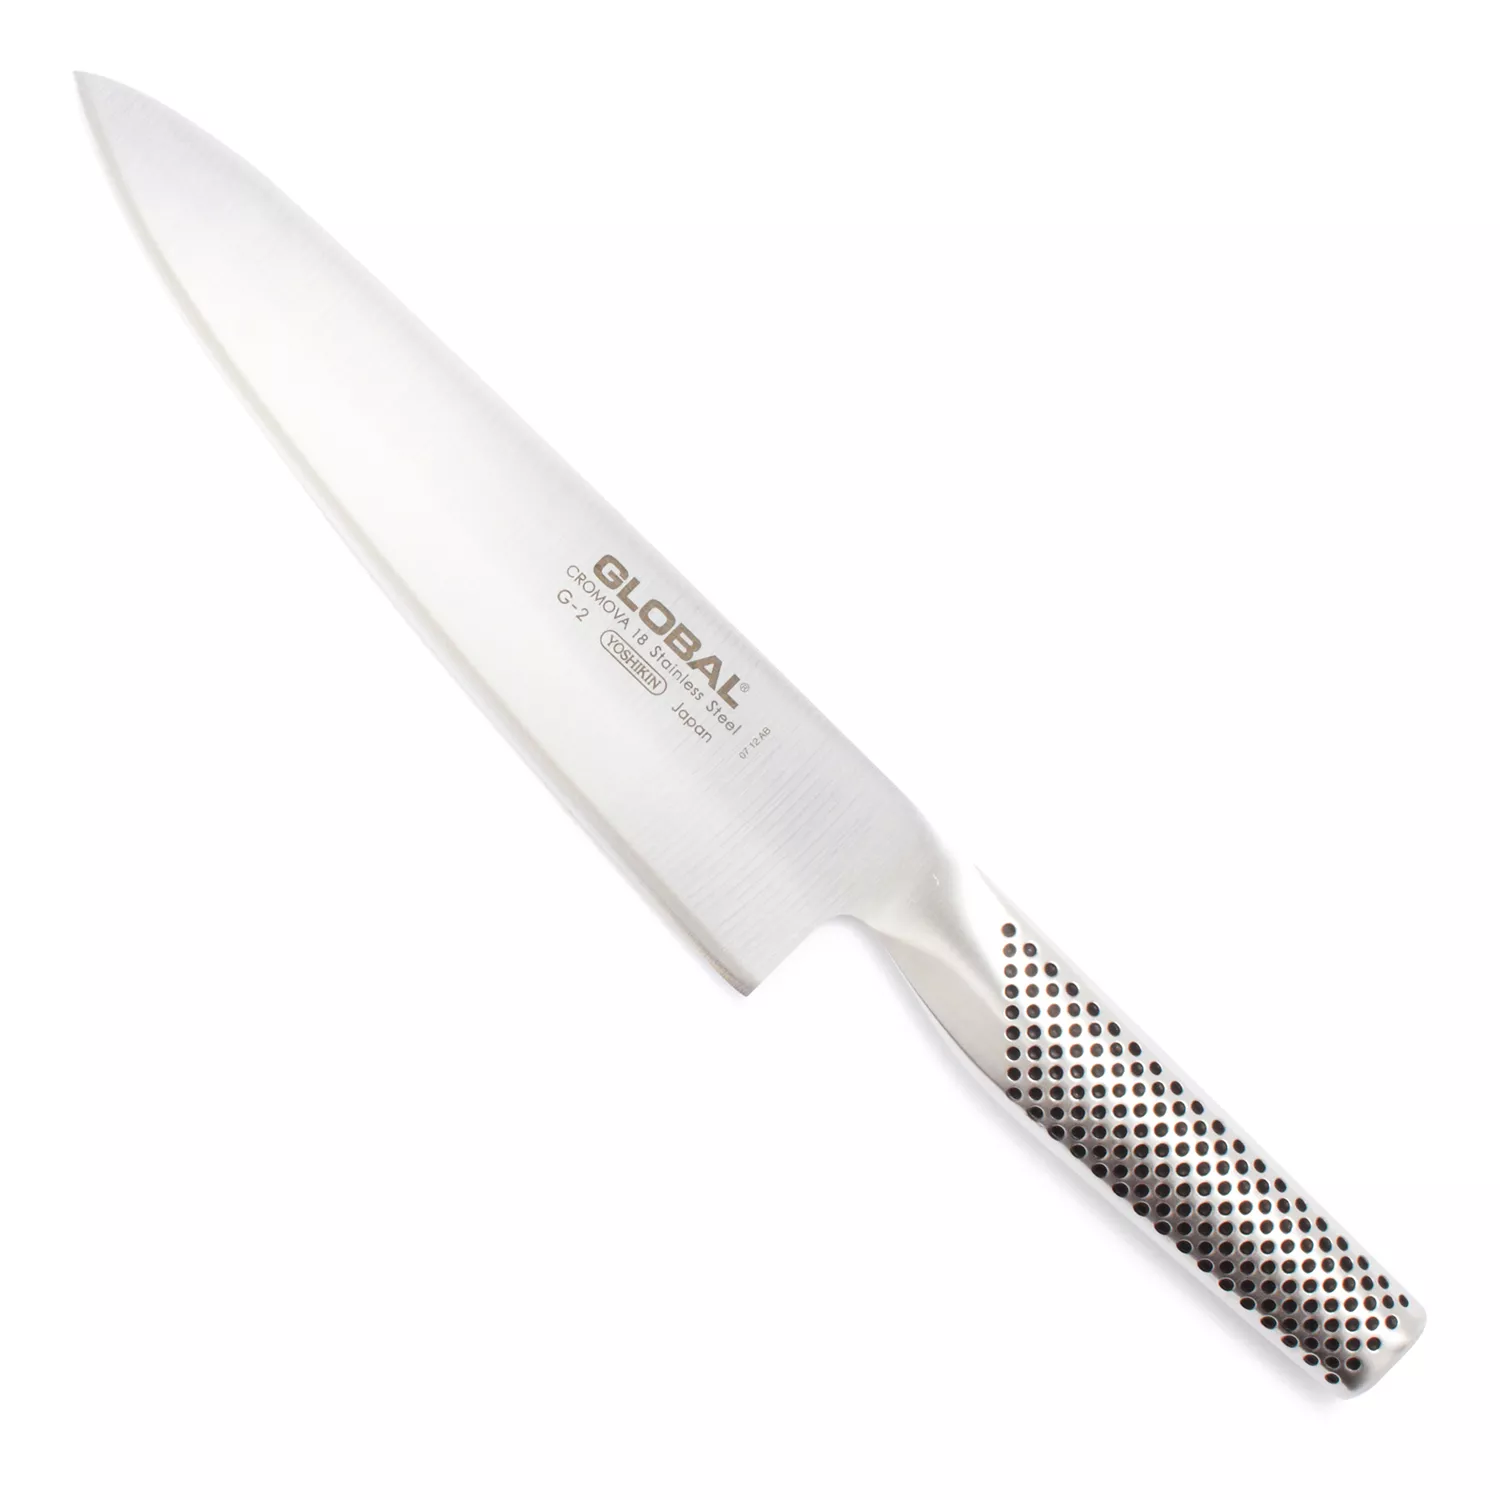  Global 8 Chef's Knife & Paring Knife Set: Home & Kitchen